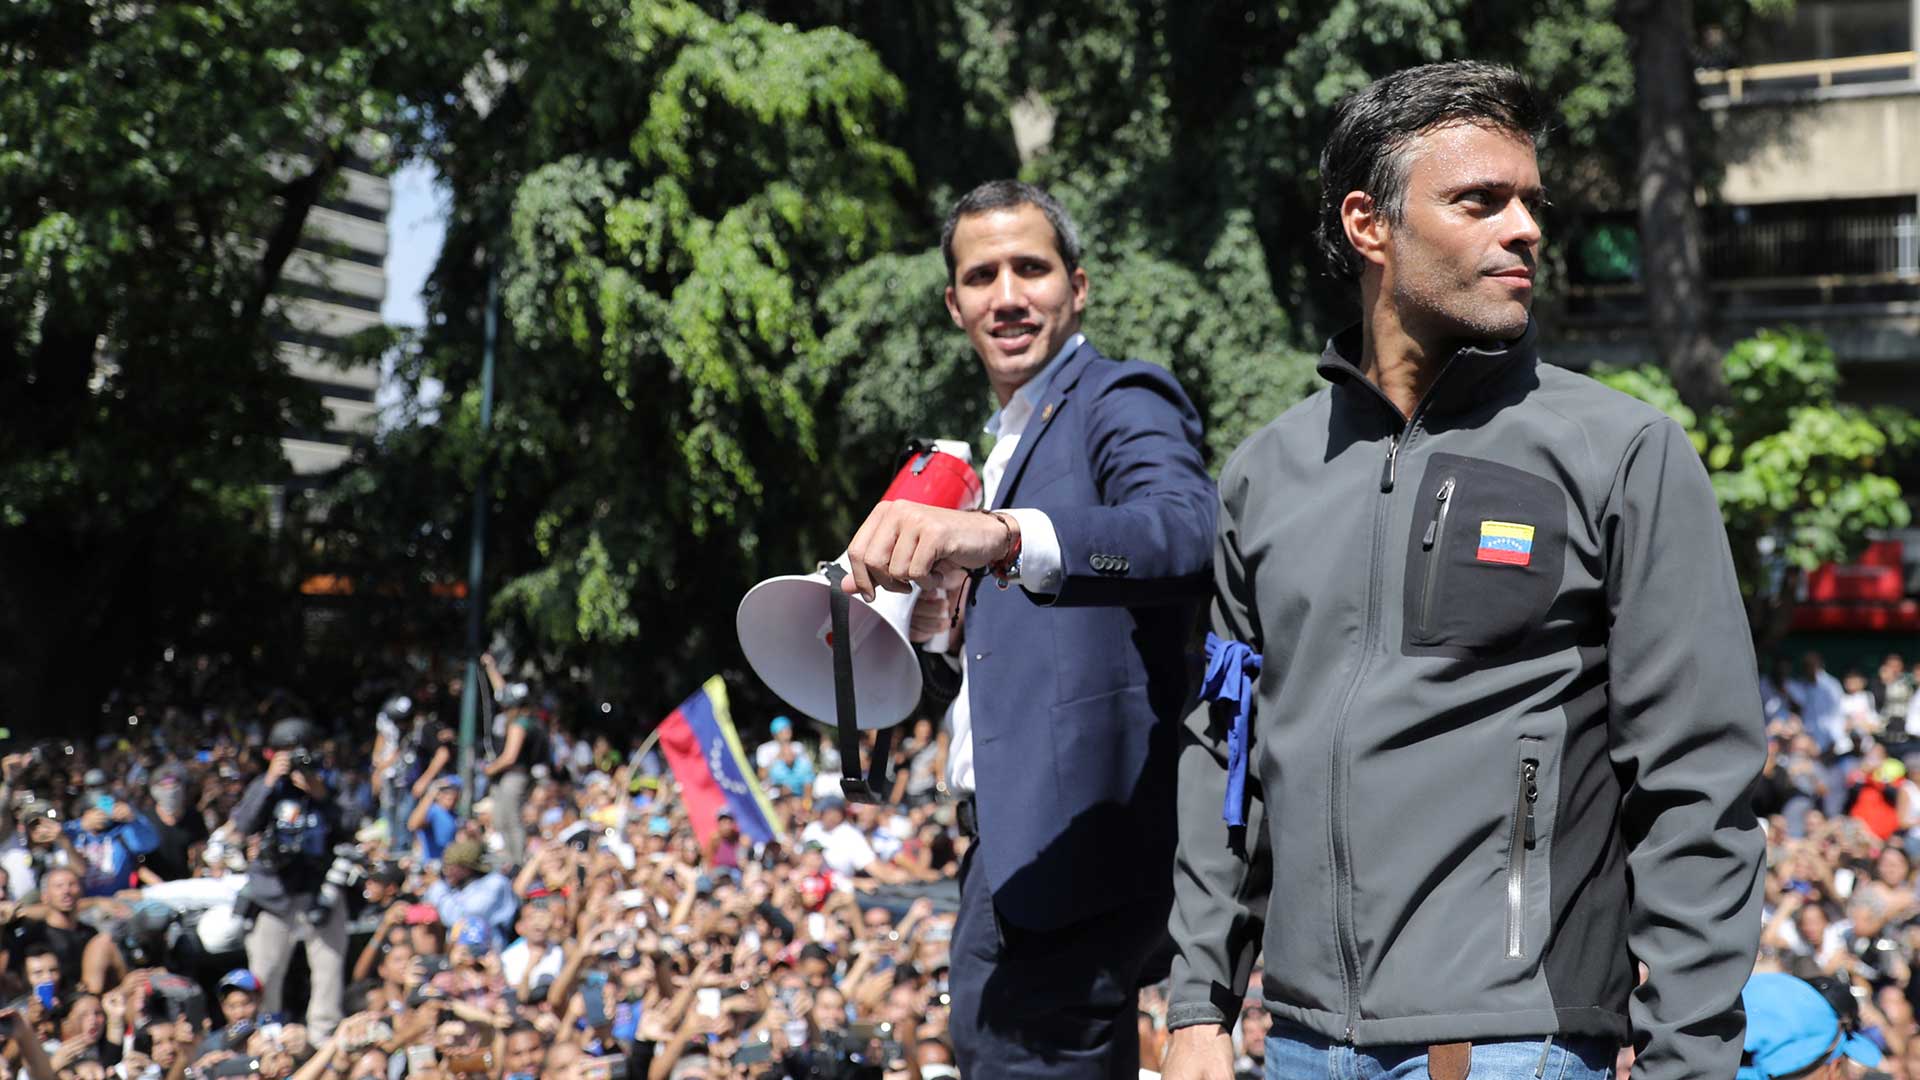 Guaidó libera a Leopoldo López y llama al Ejército a acabar con el régimen de Maduro